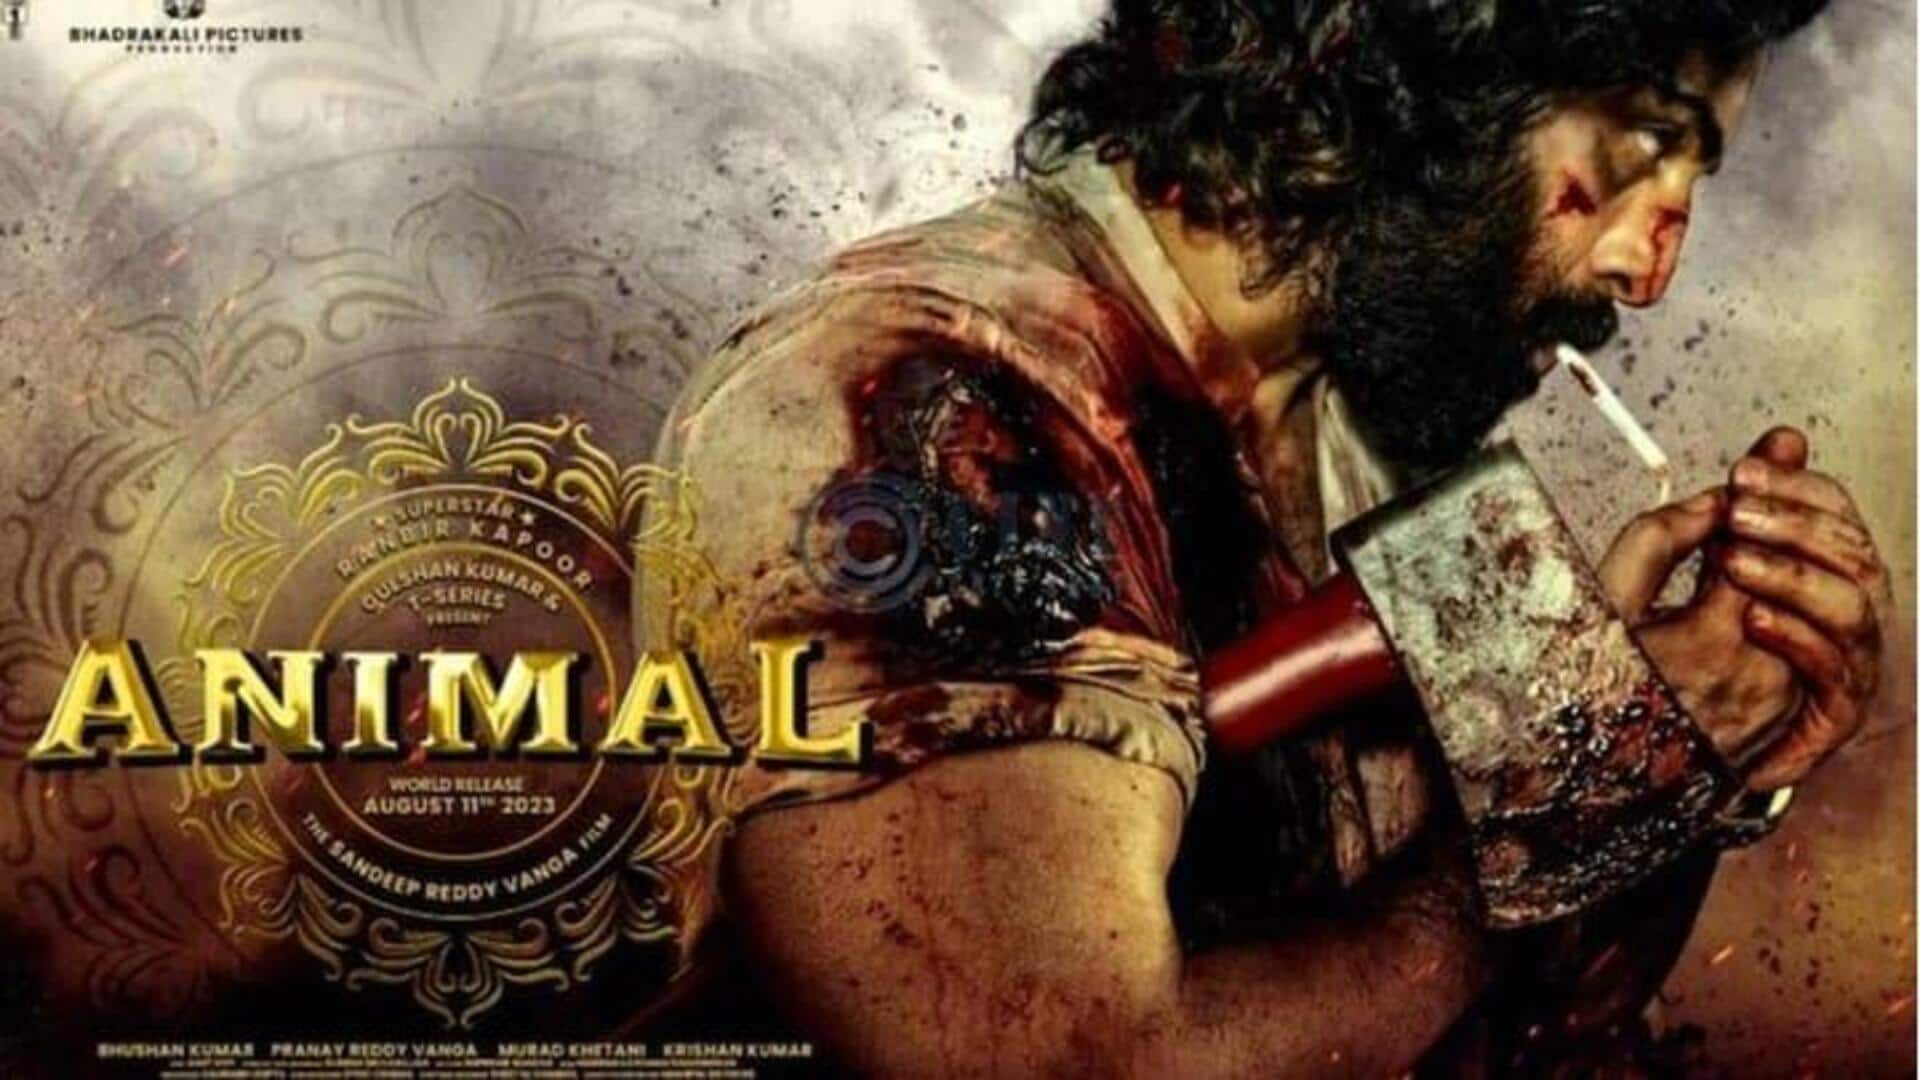 Box office: Ranbir Kapoor's biggest opener 'Animal' mints Rs. 61cr